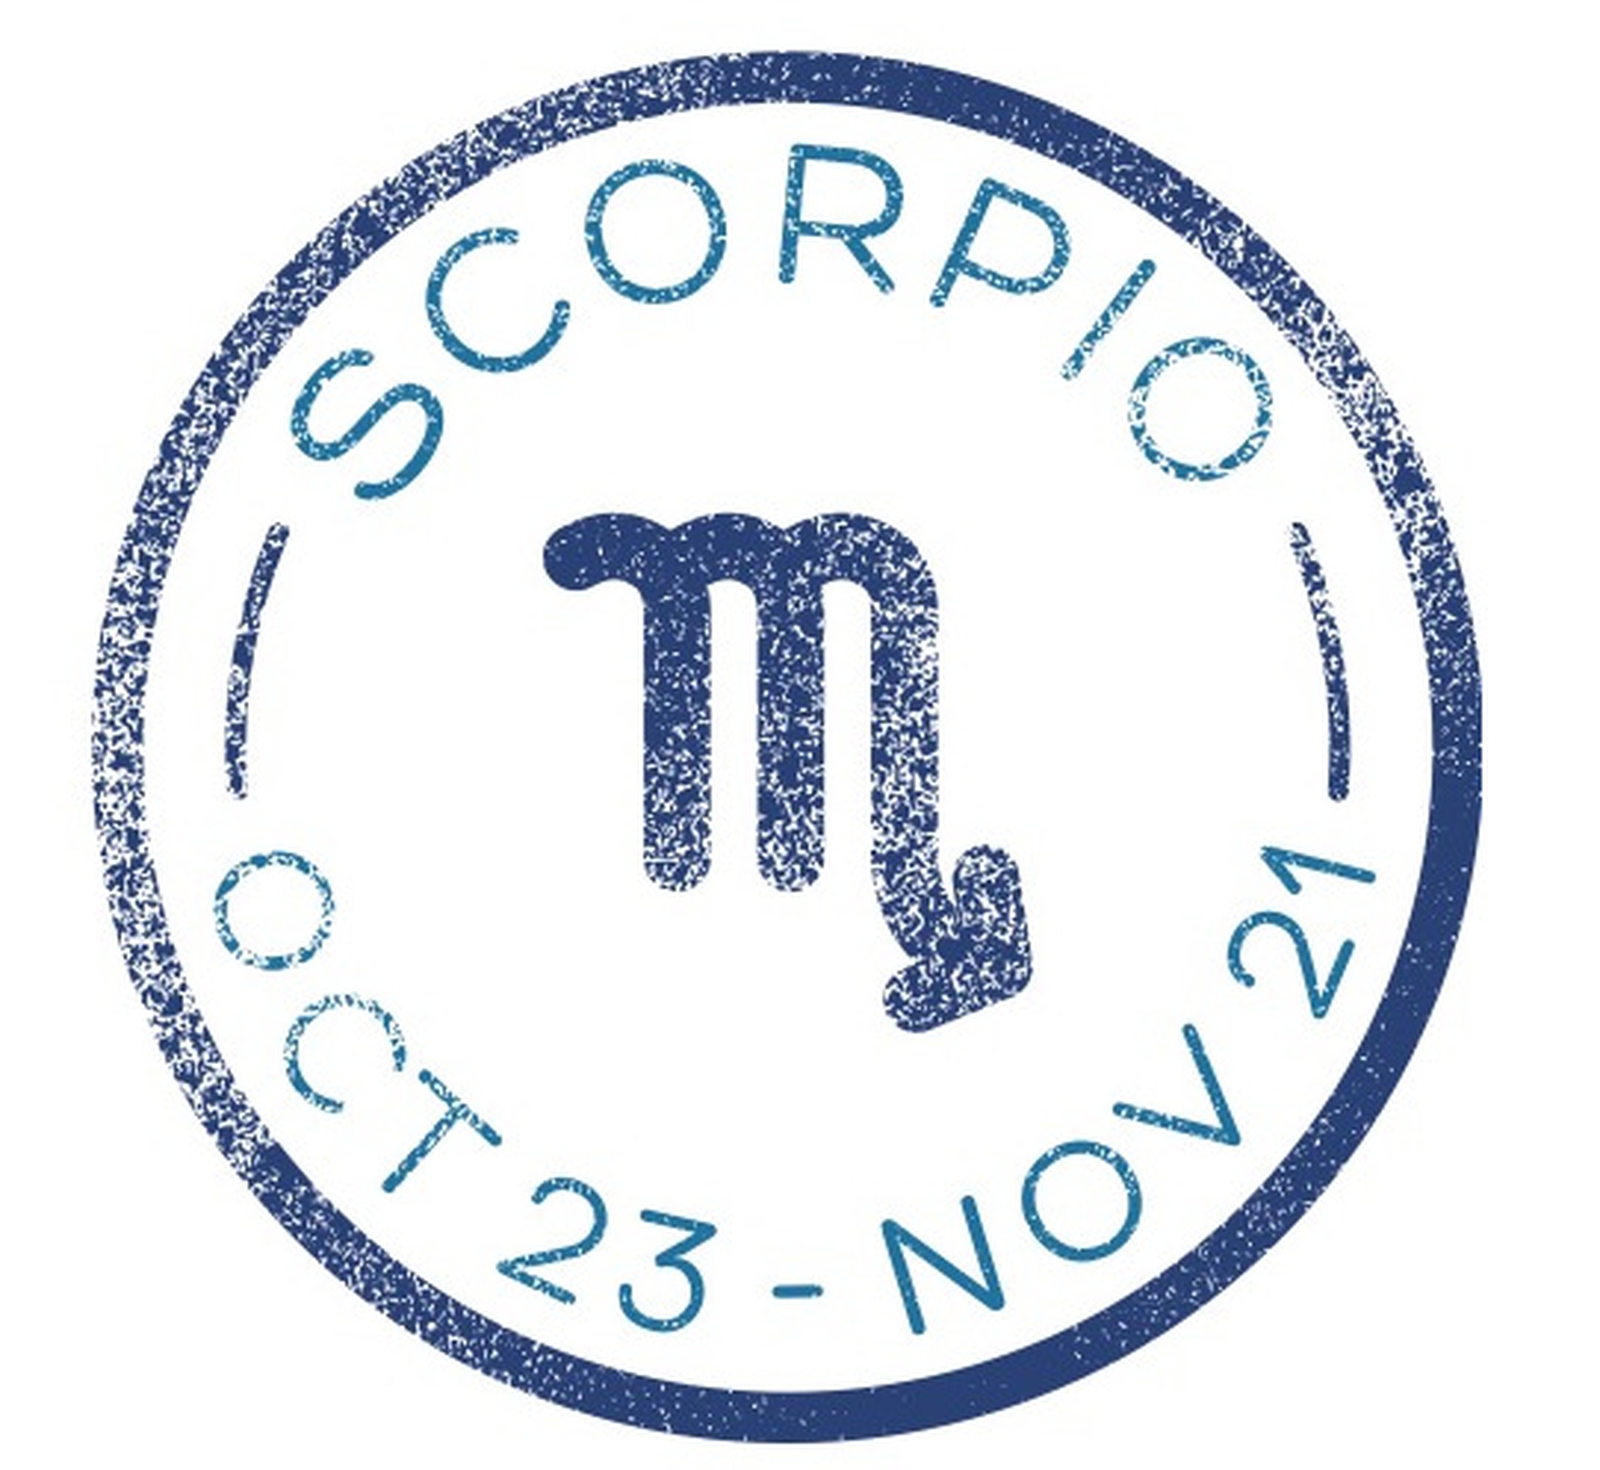 Is November 24th a Scorpio?